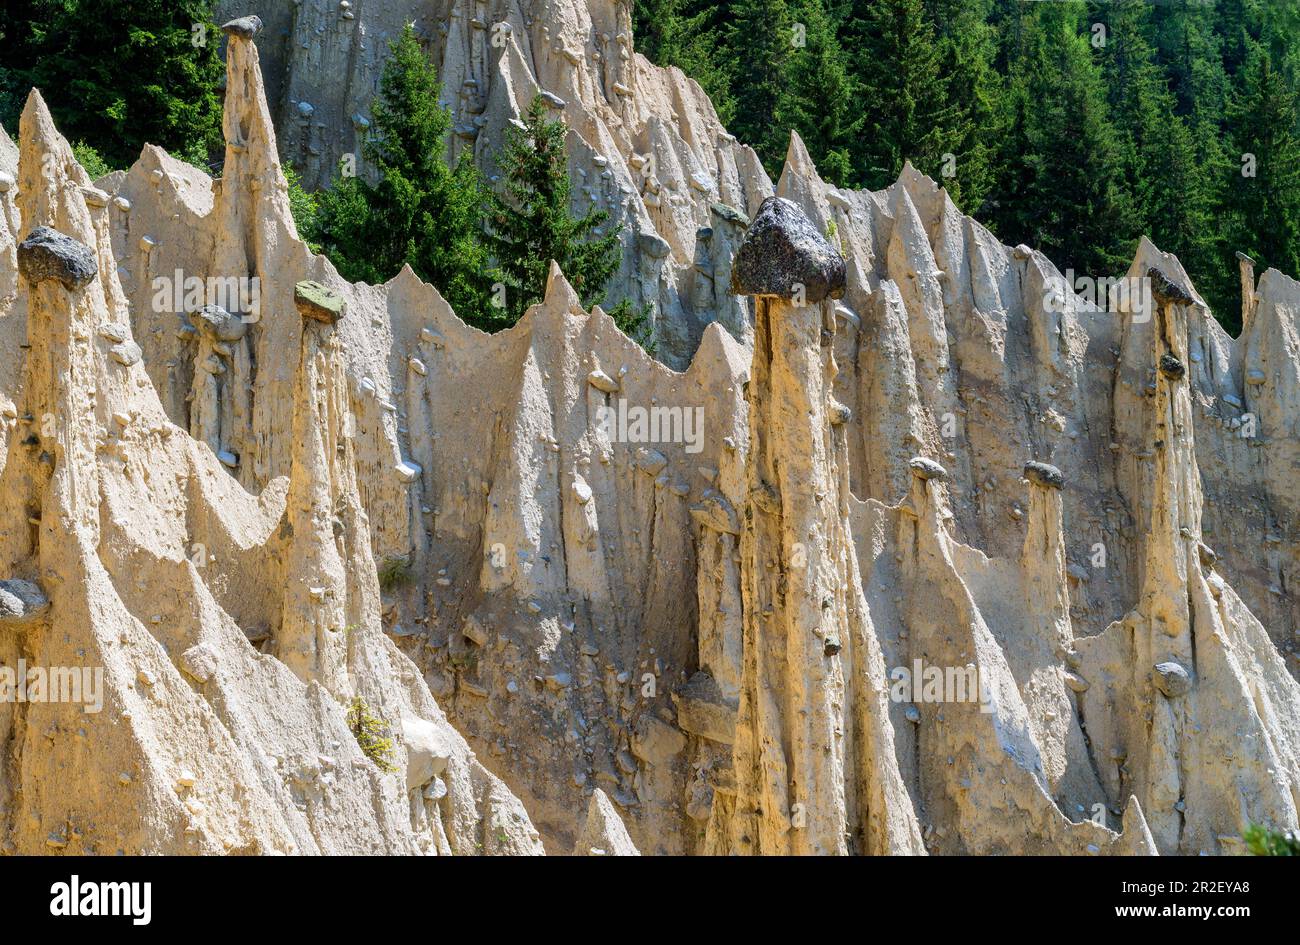 Les pyramides de la terre, monument naturel à Oberwielenbach, percha, Vallée de Puster, Tyrol du Sud, Italie Banque D'Images